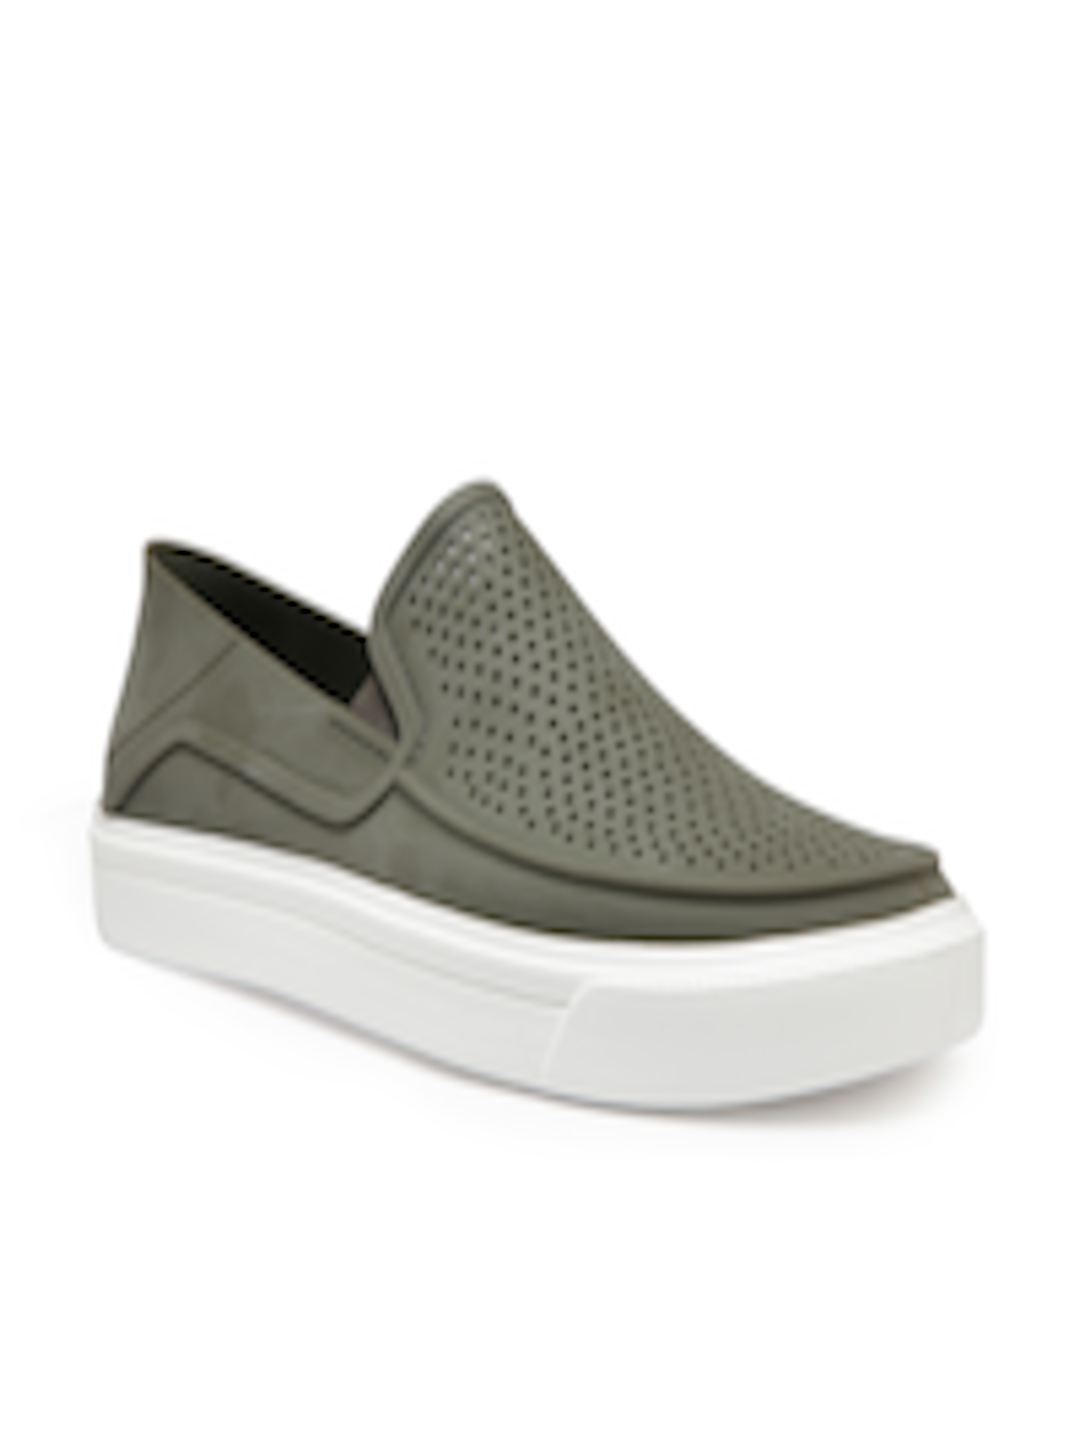 Buy Crocs Citilane Men Green Slip On Sneakers - Casual Shoes for Men ...